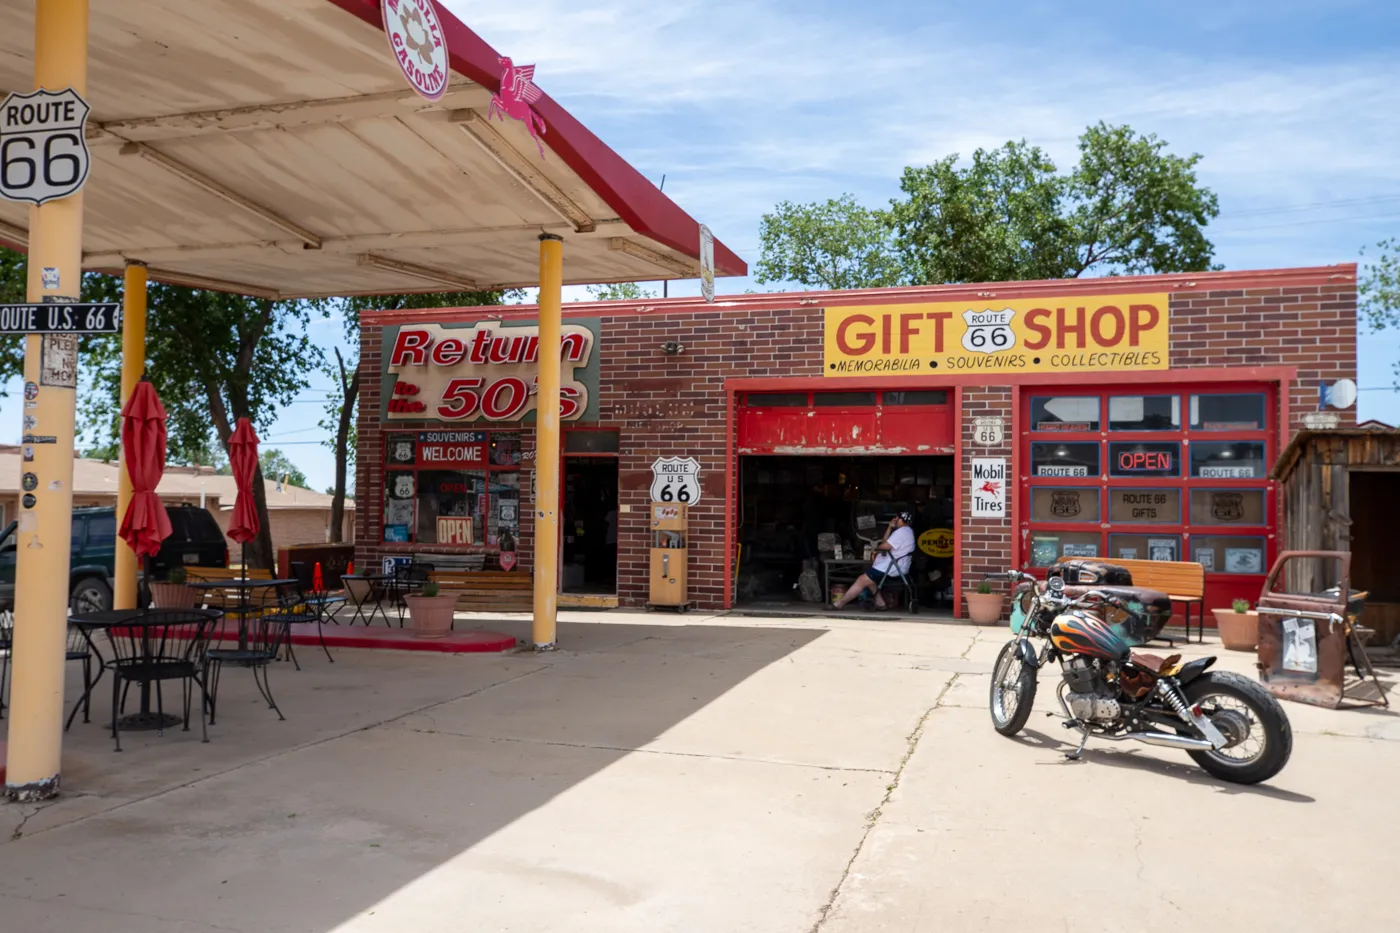 Return to the 50's Gift Shop in Seligman, Arizona